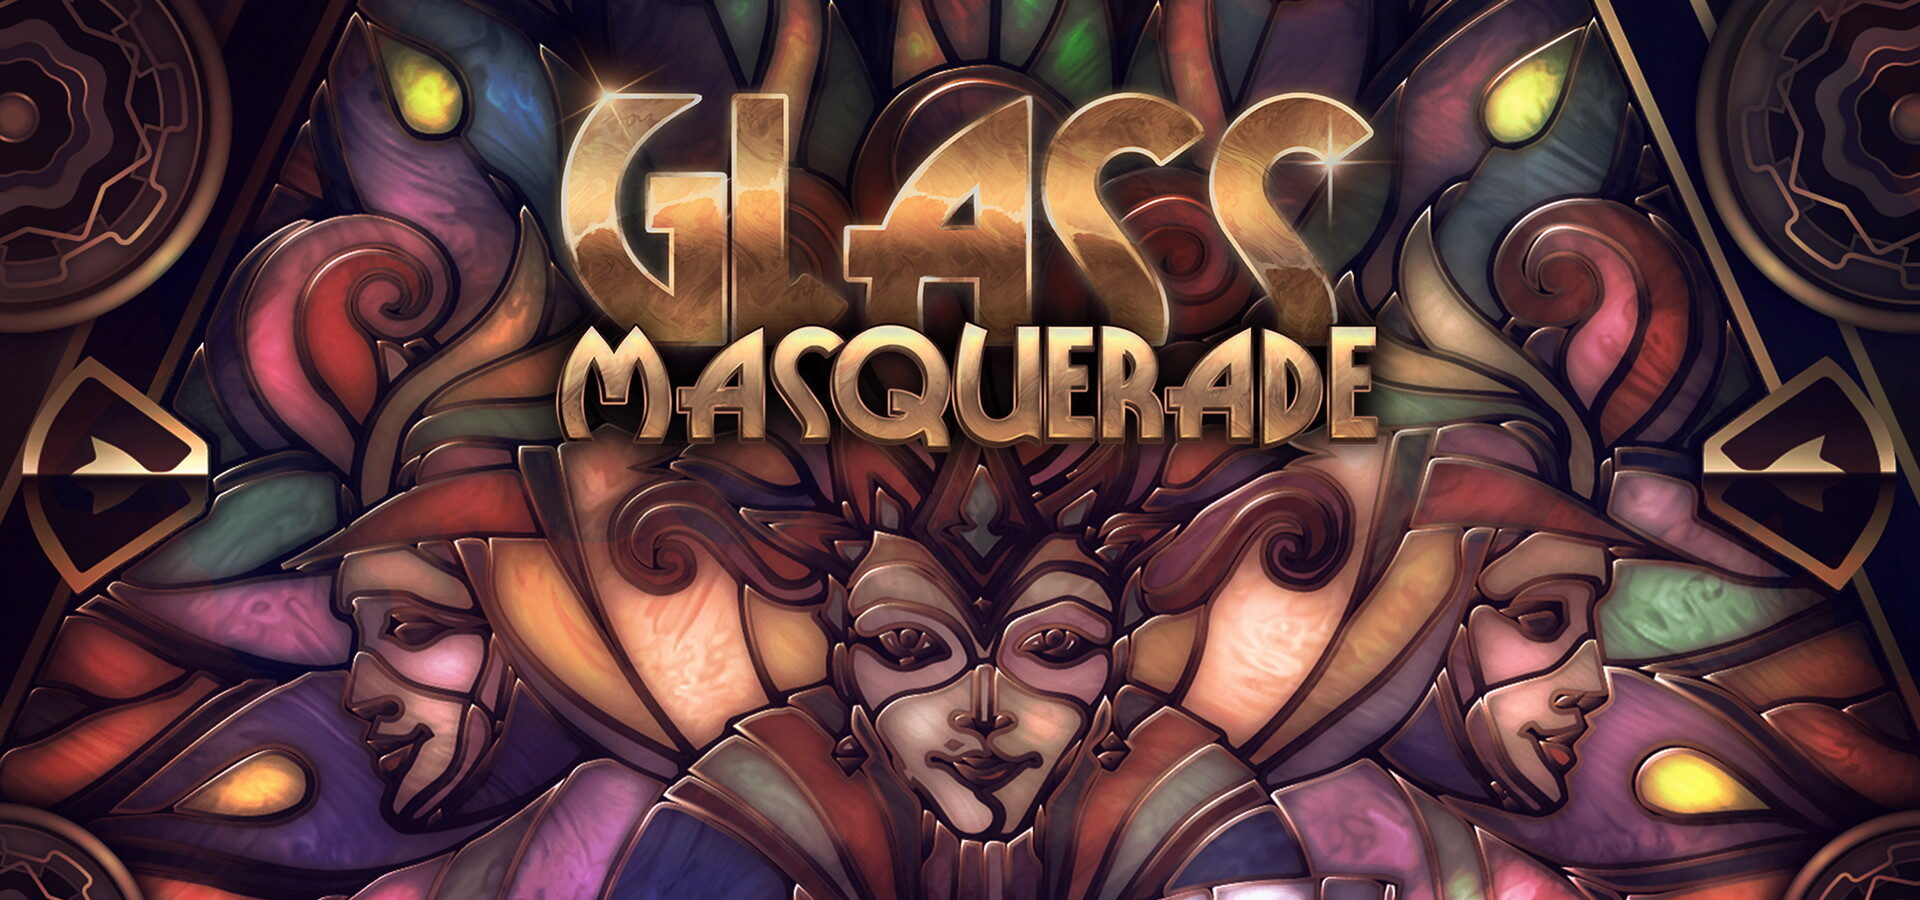 Glass Masquerade